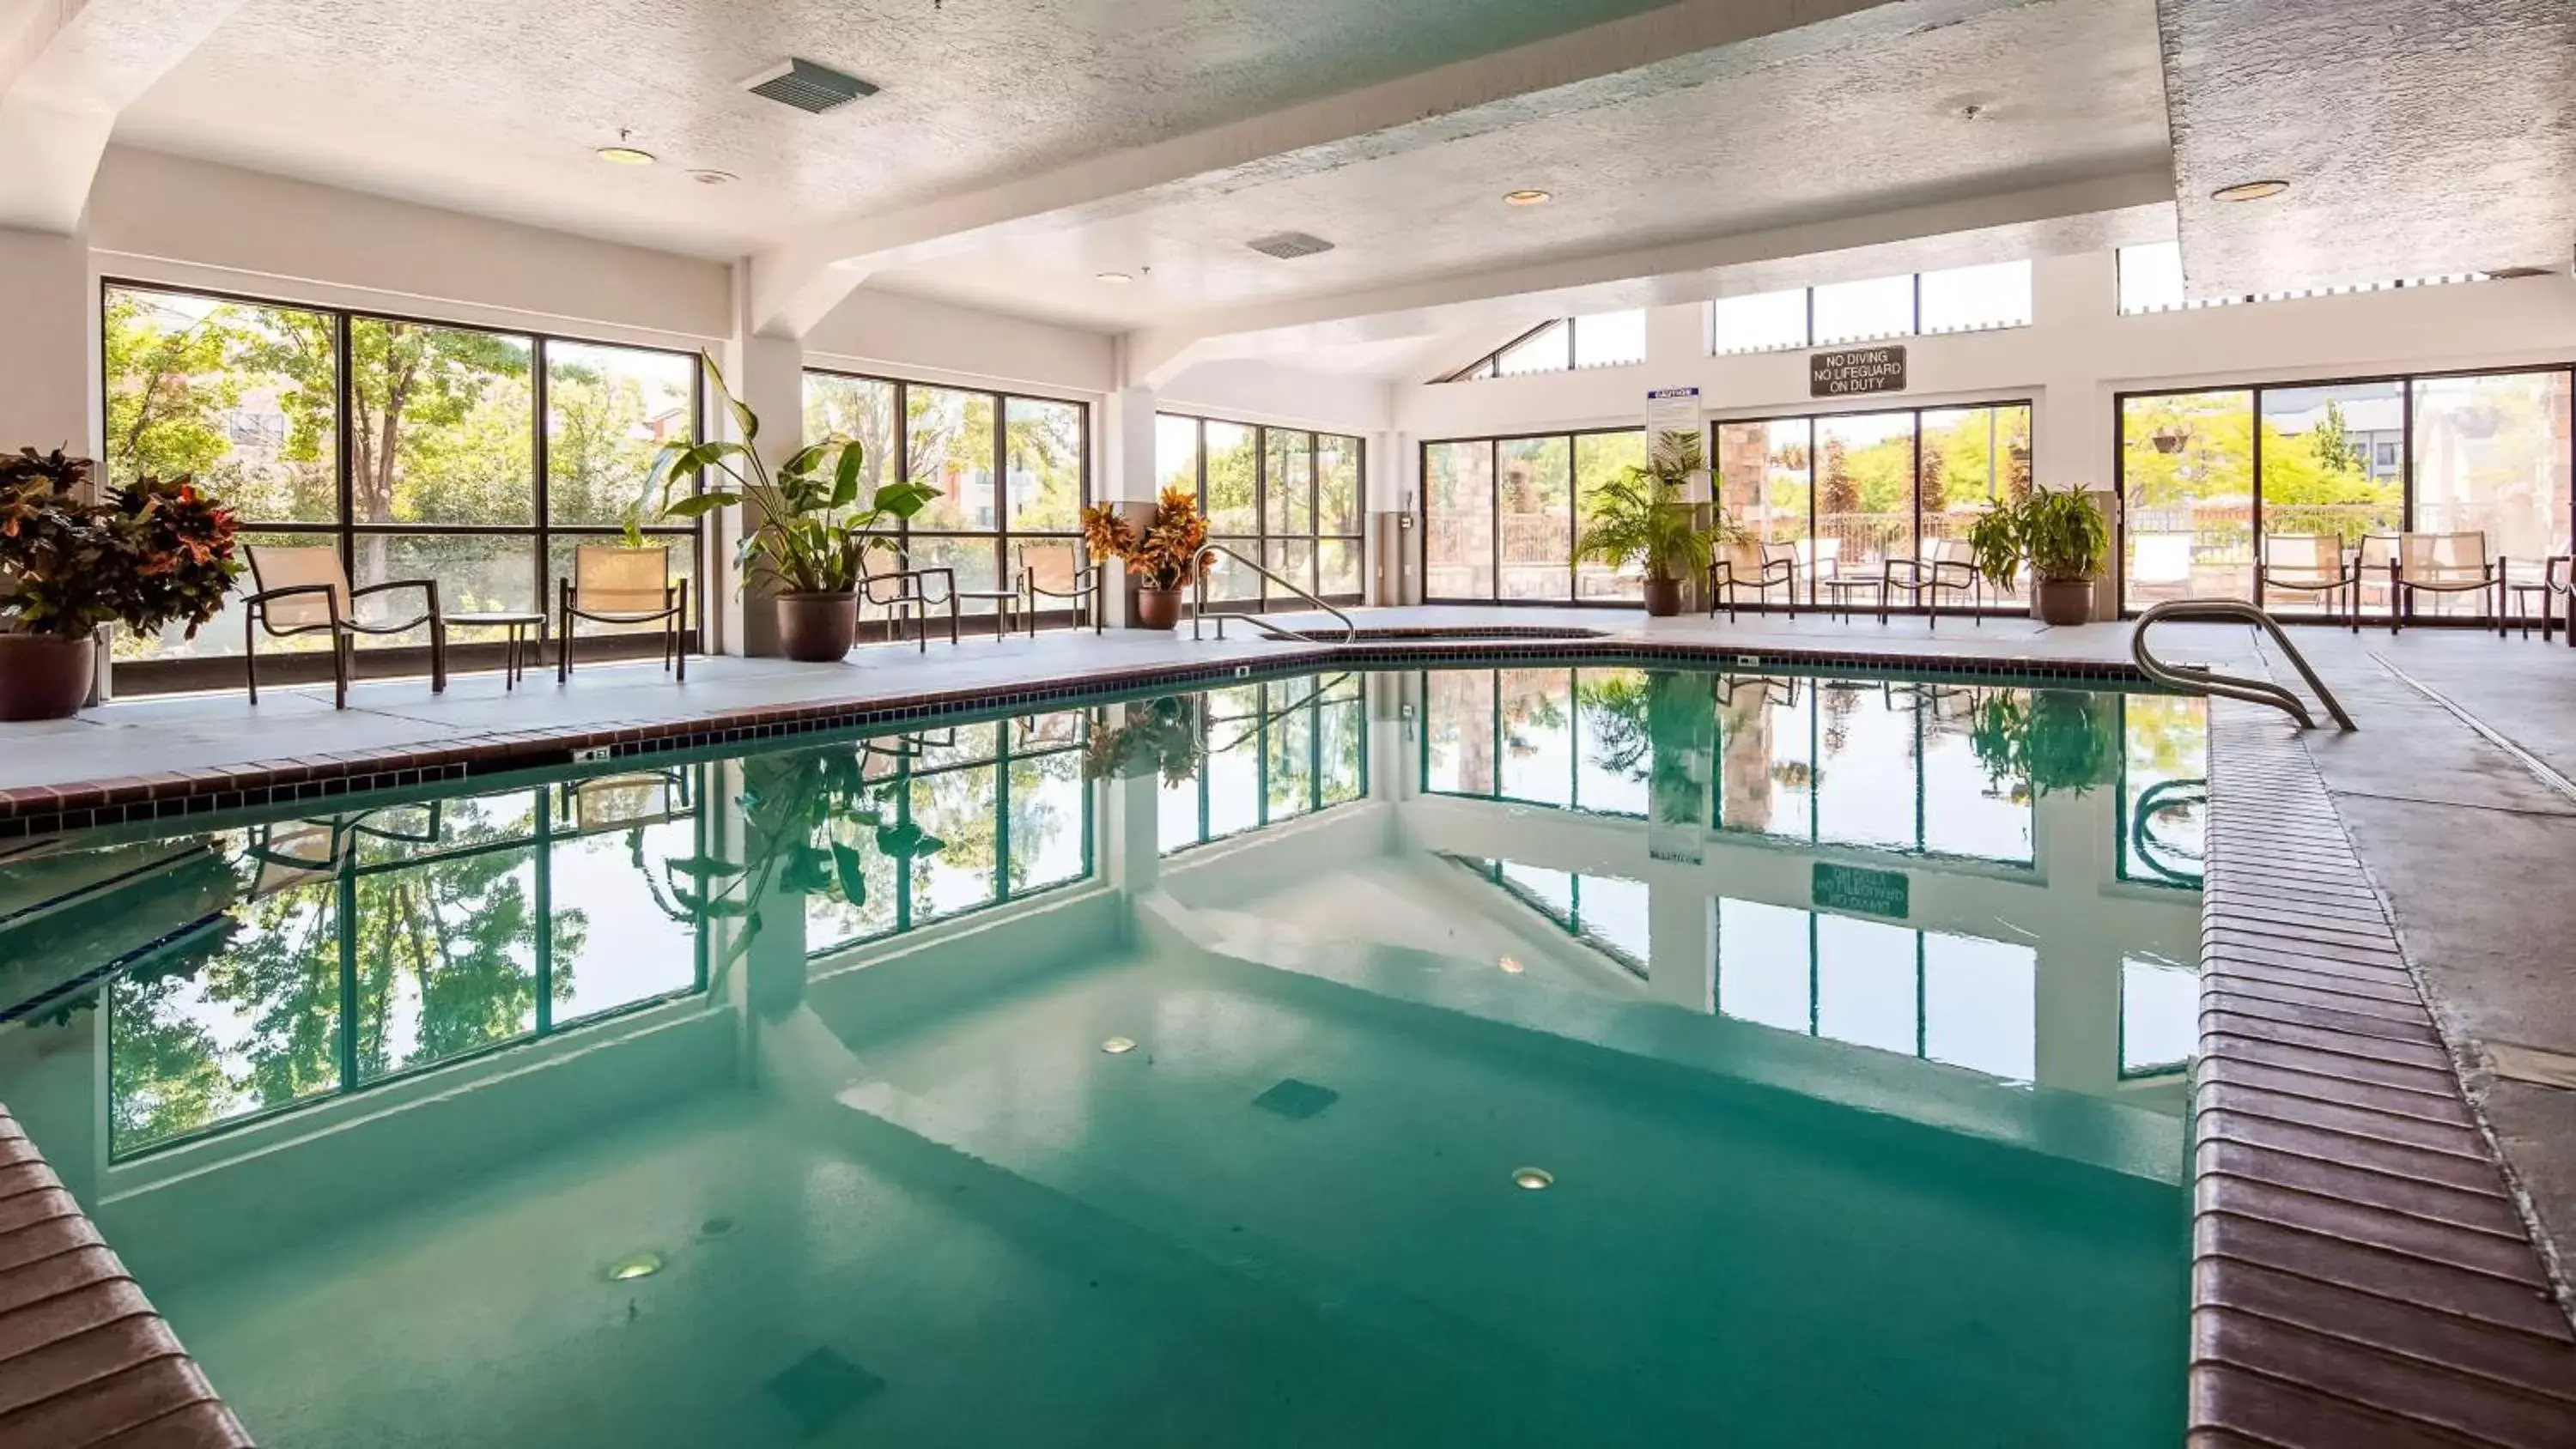 On site, Swimming Pool in Best Western Plus Cotton Tree Inn